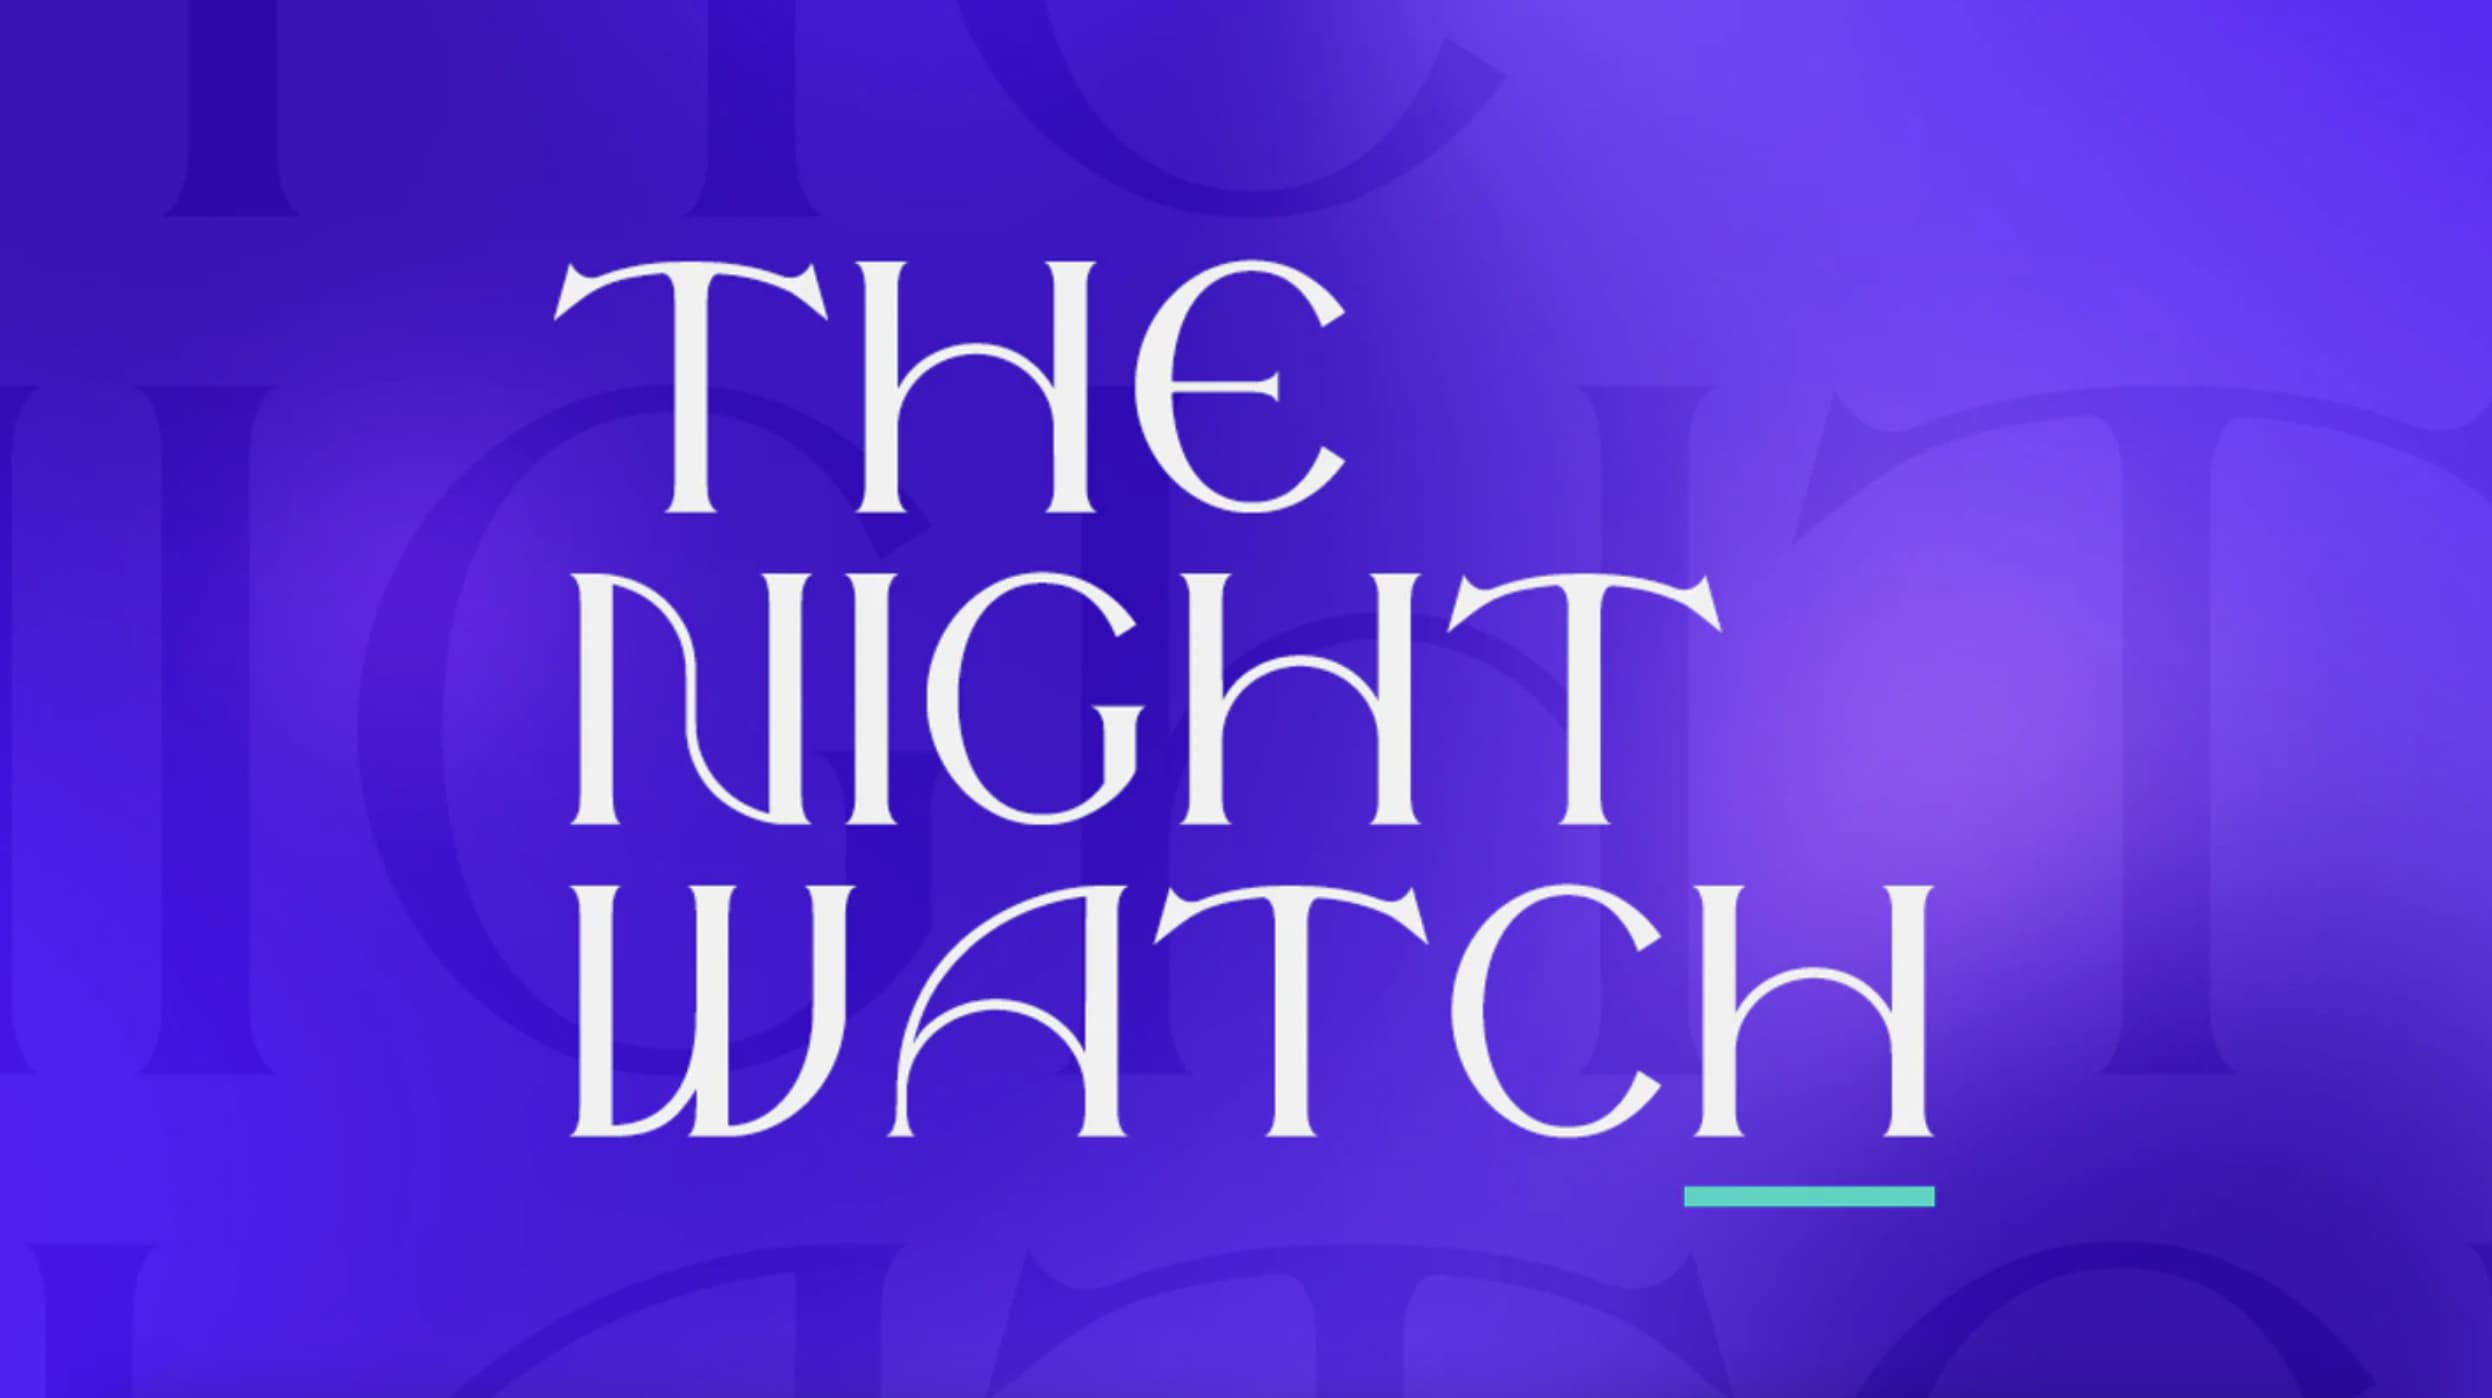 Tipos de letras para logos: The Night Watch